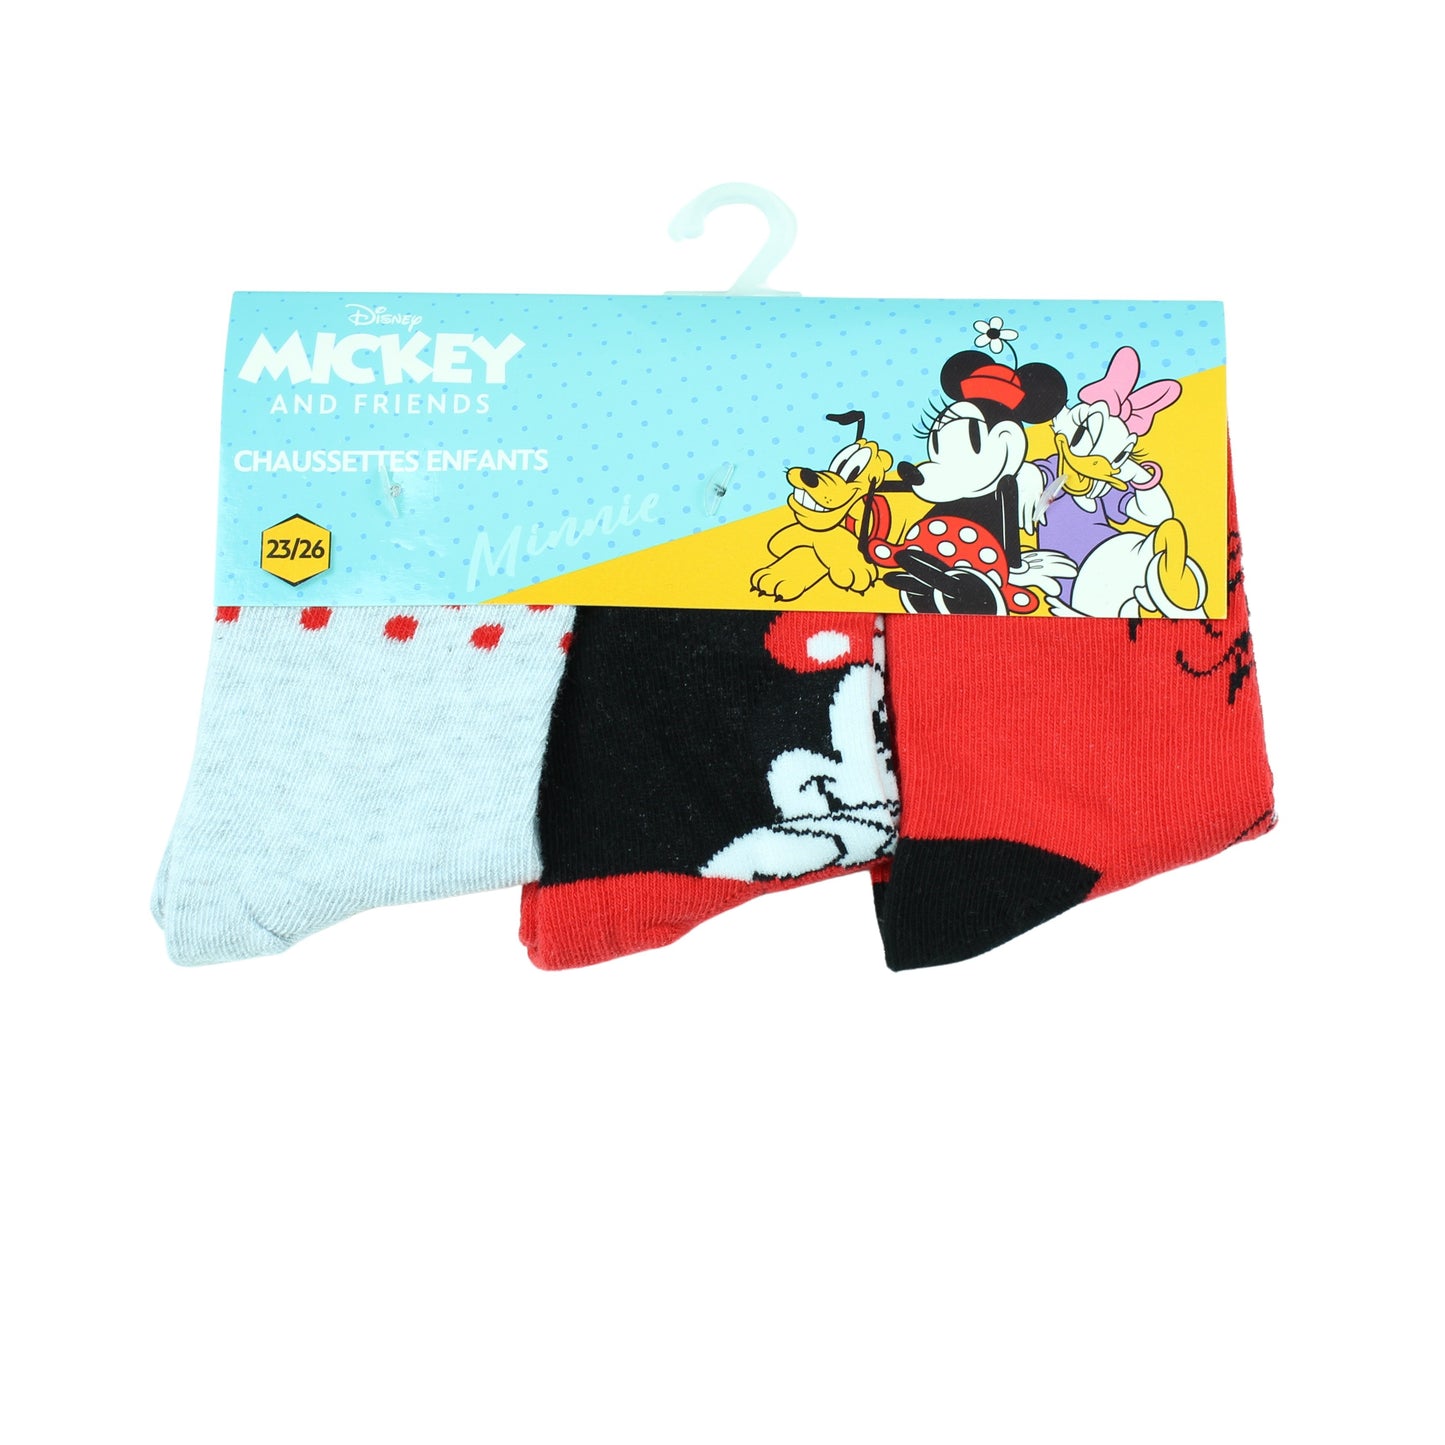 Minnie Mouse socks stockings set of 3